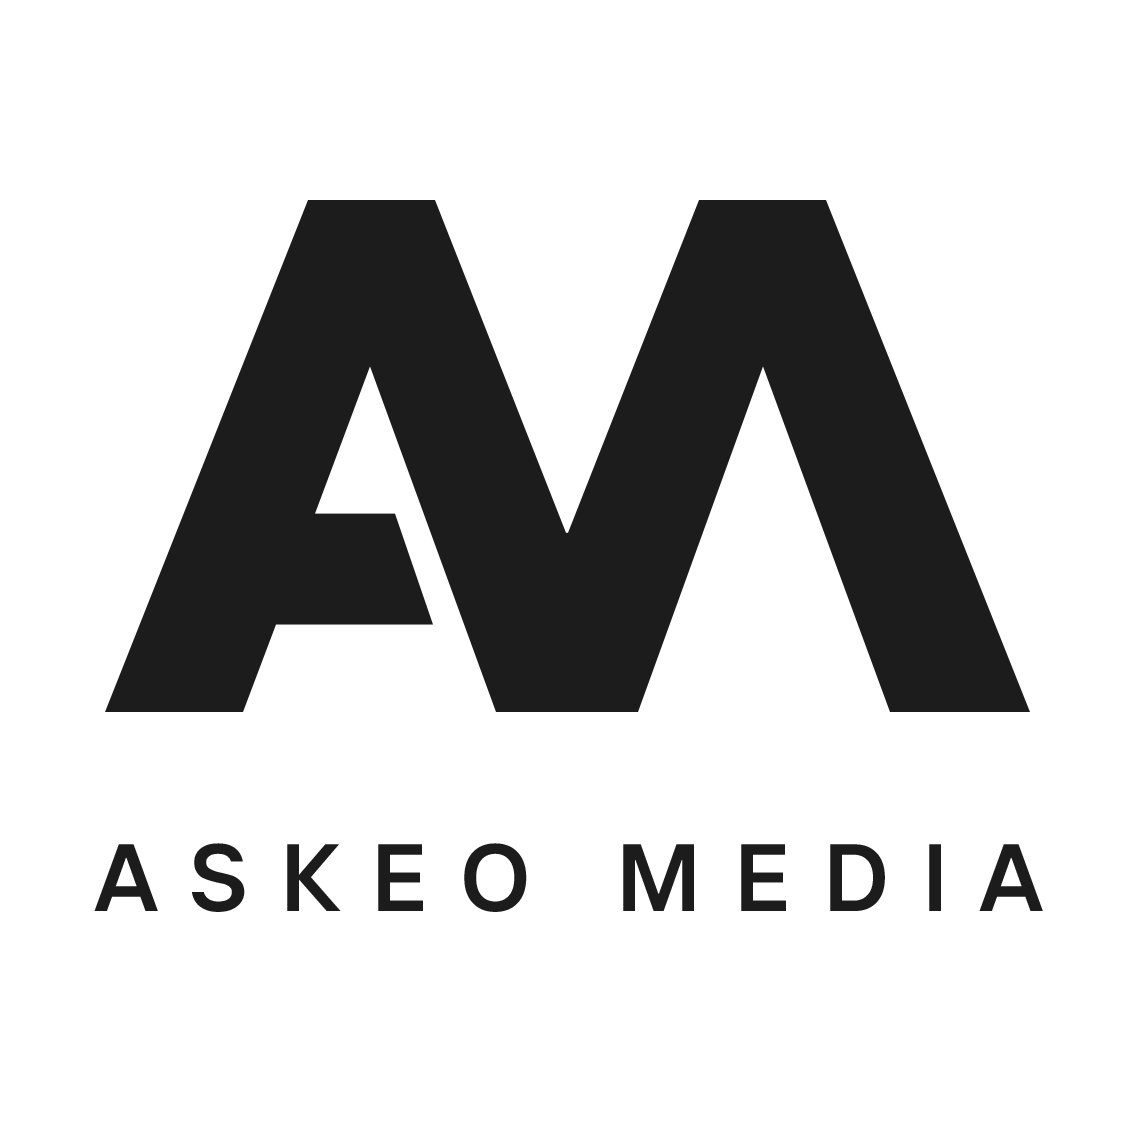 Askeomedia